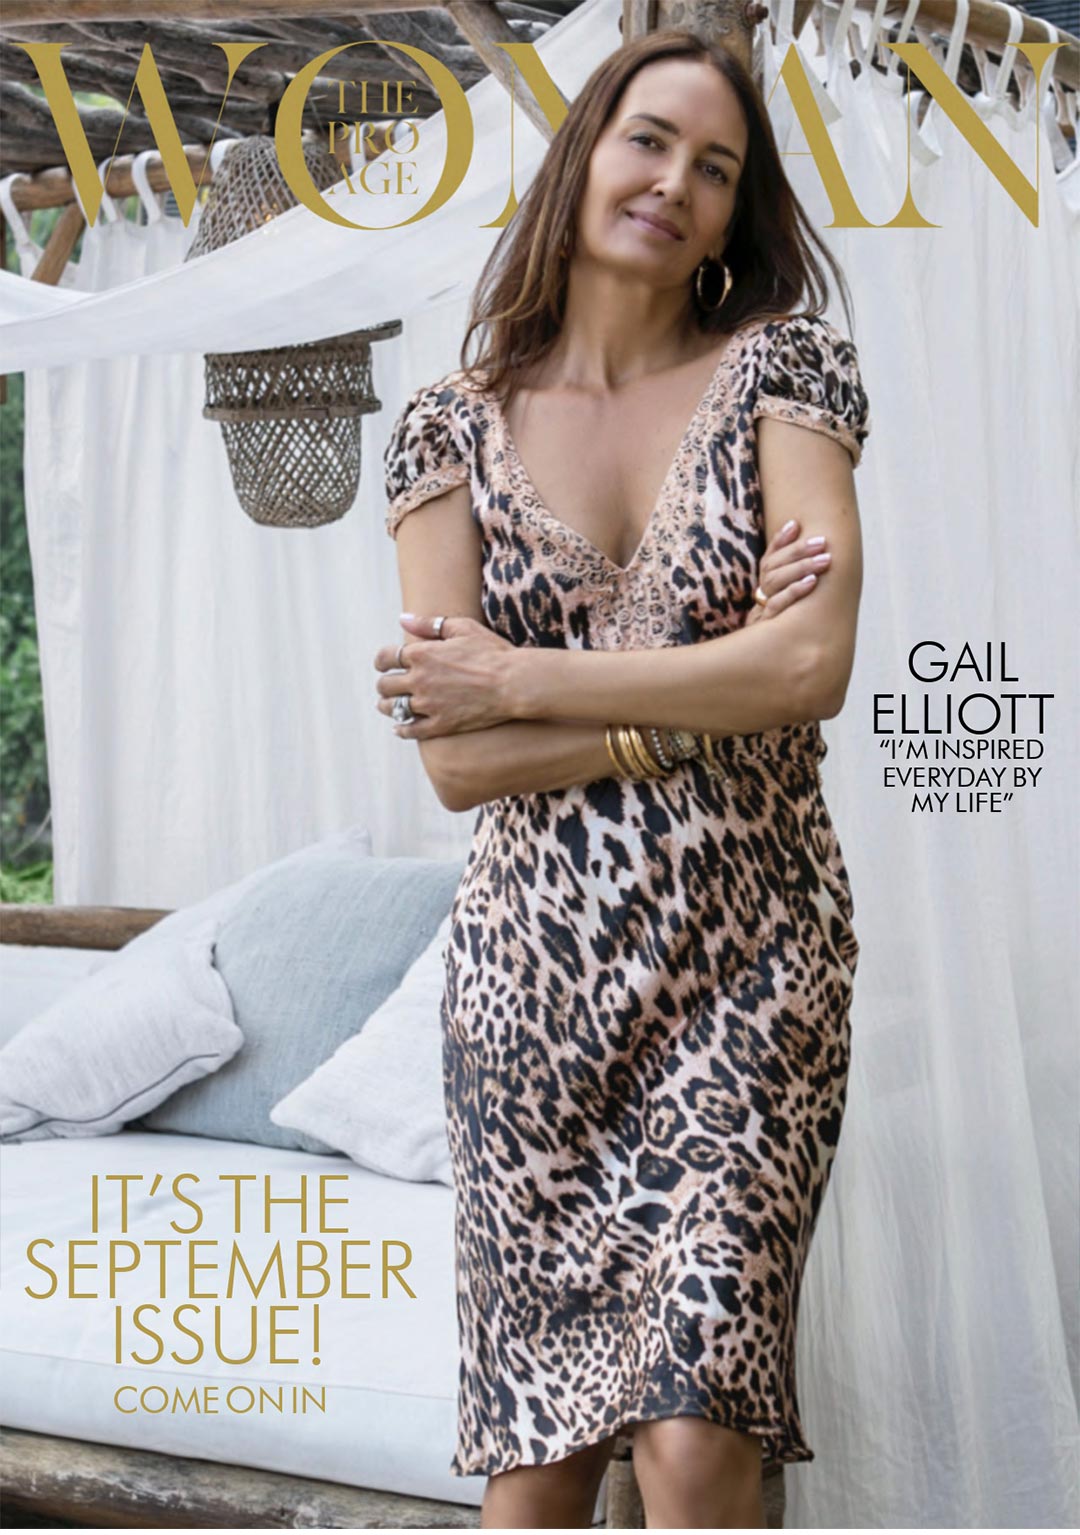 The Pro Age Woman Magazine: Designer Profile Gail Elliott